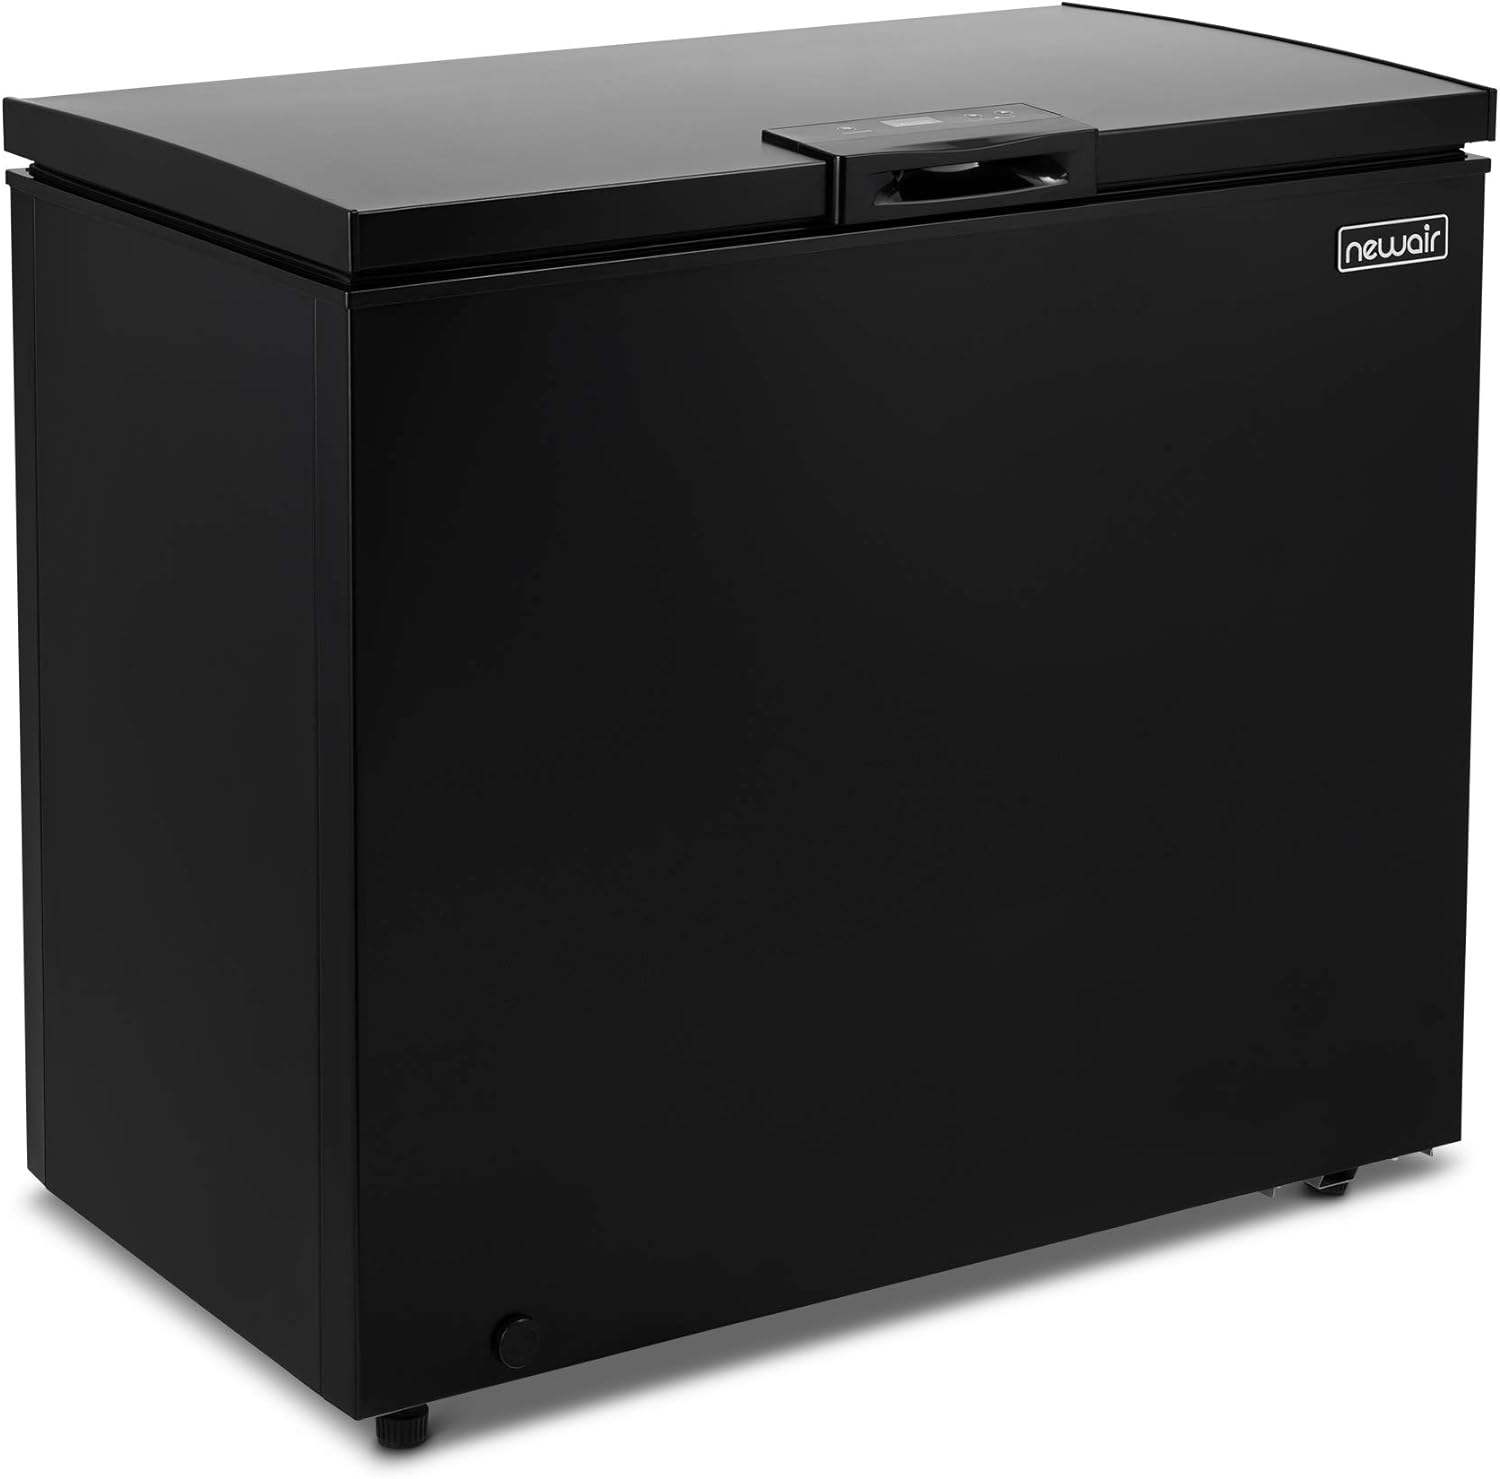 compact-chest-freezer-nft070mb00-black-1